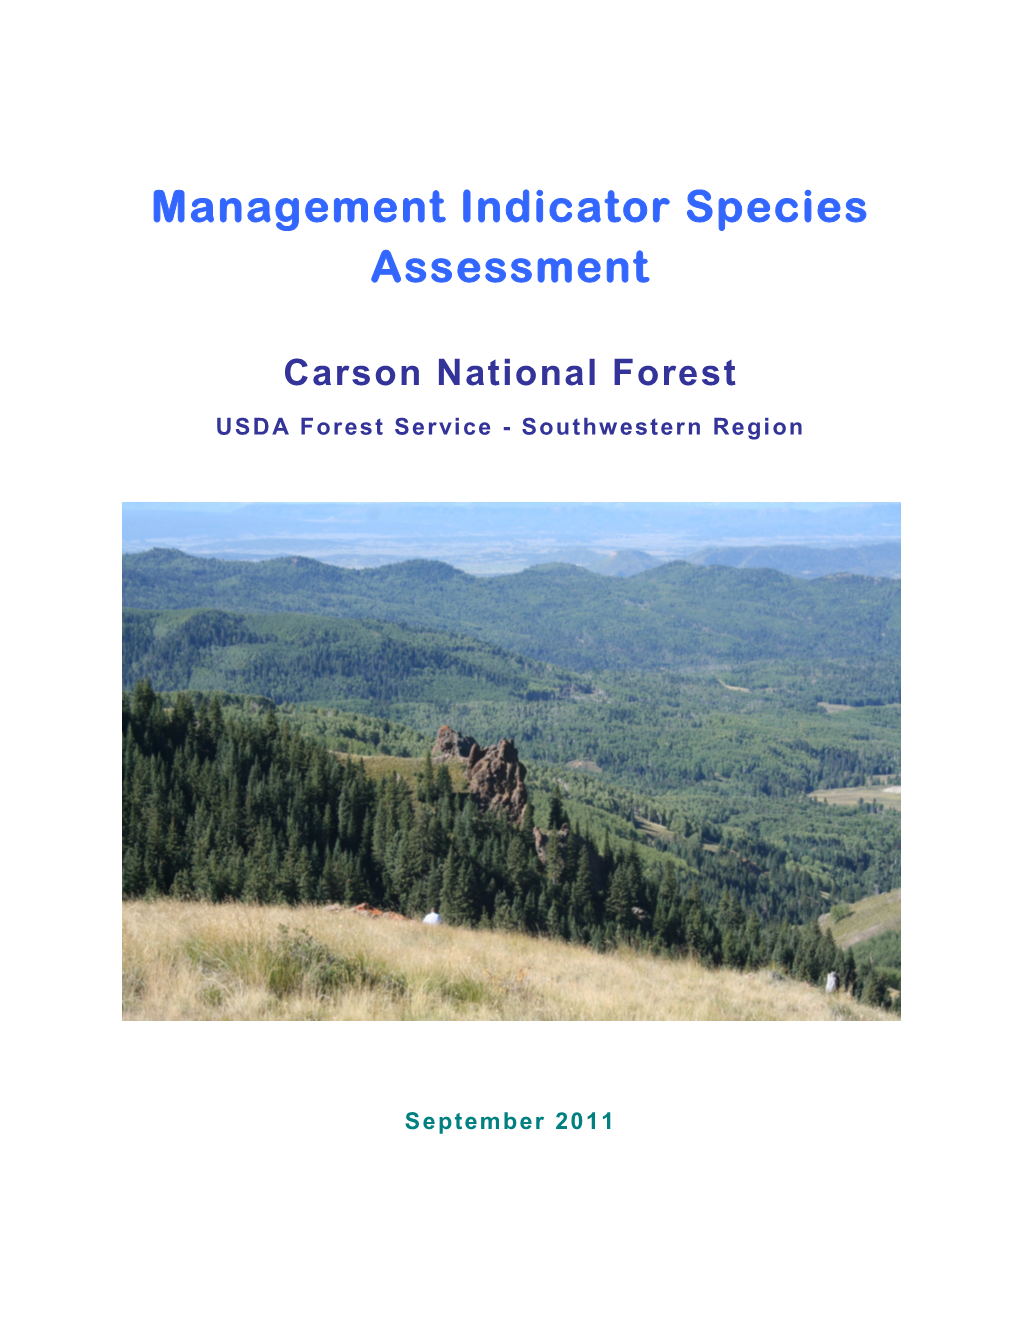 2011 Management Indicator Species Assessment